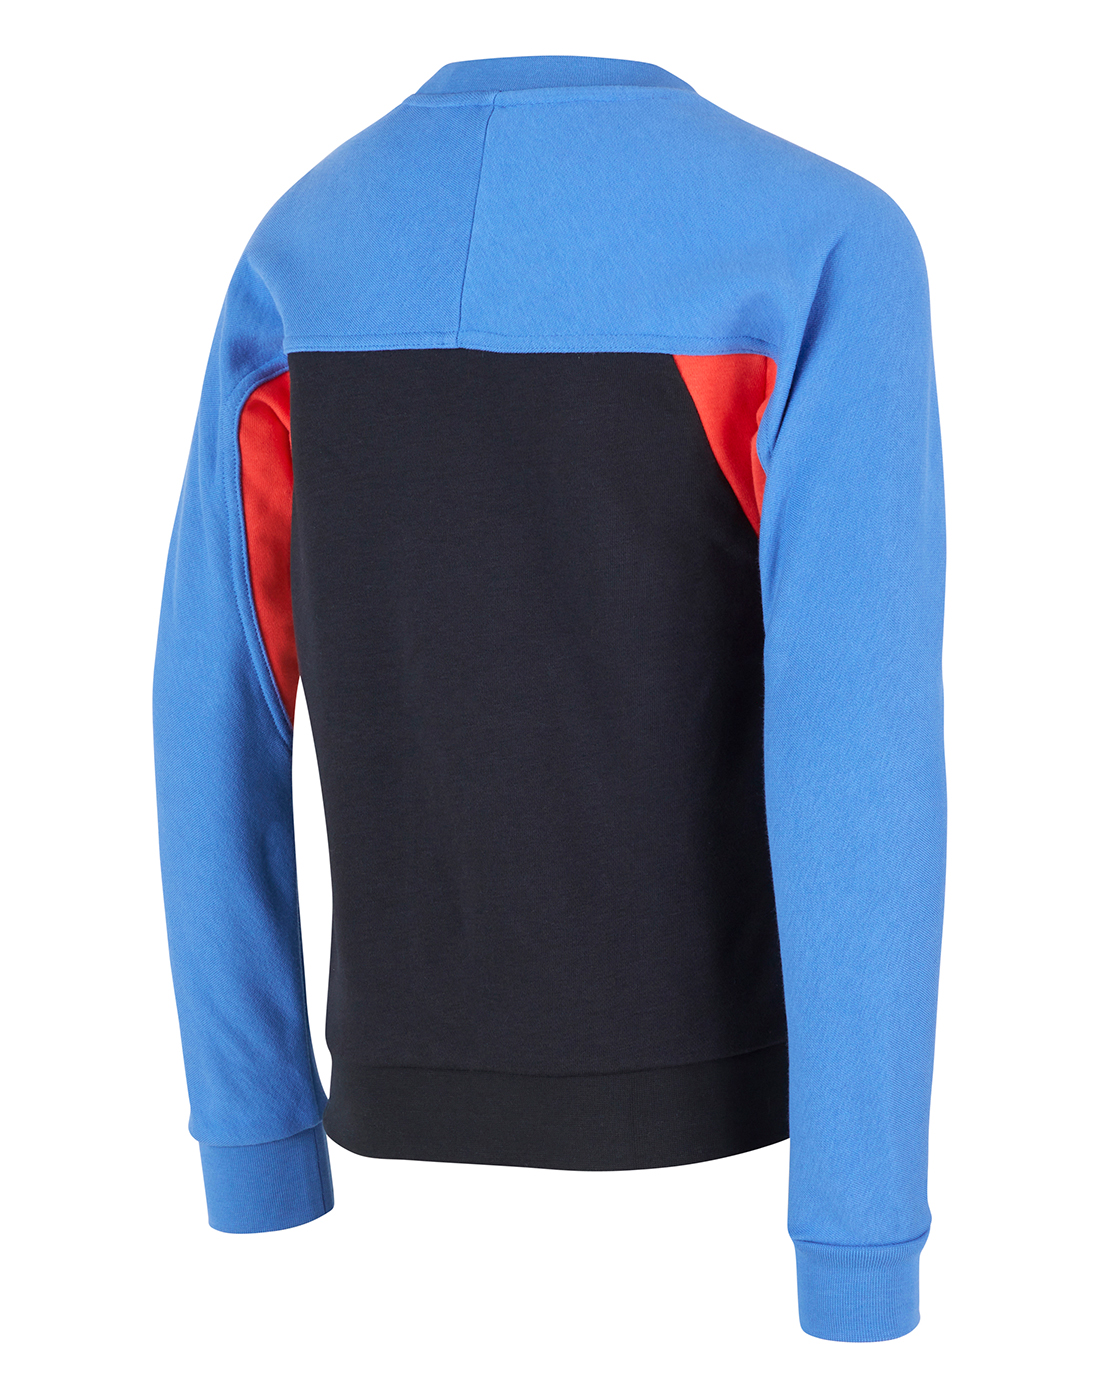 adidas Originals Older Boys Crew Neck Sweatshirt - Blue | Life Style ...